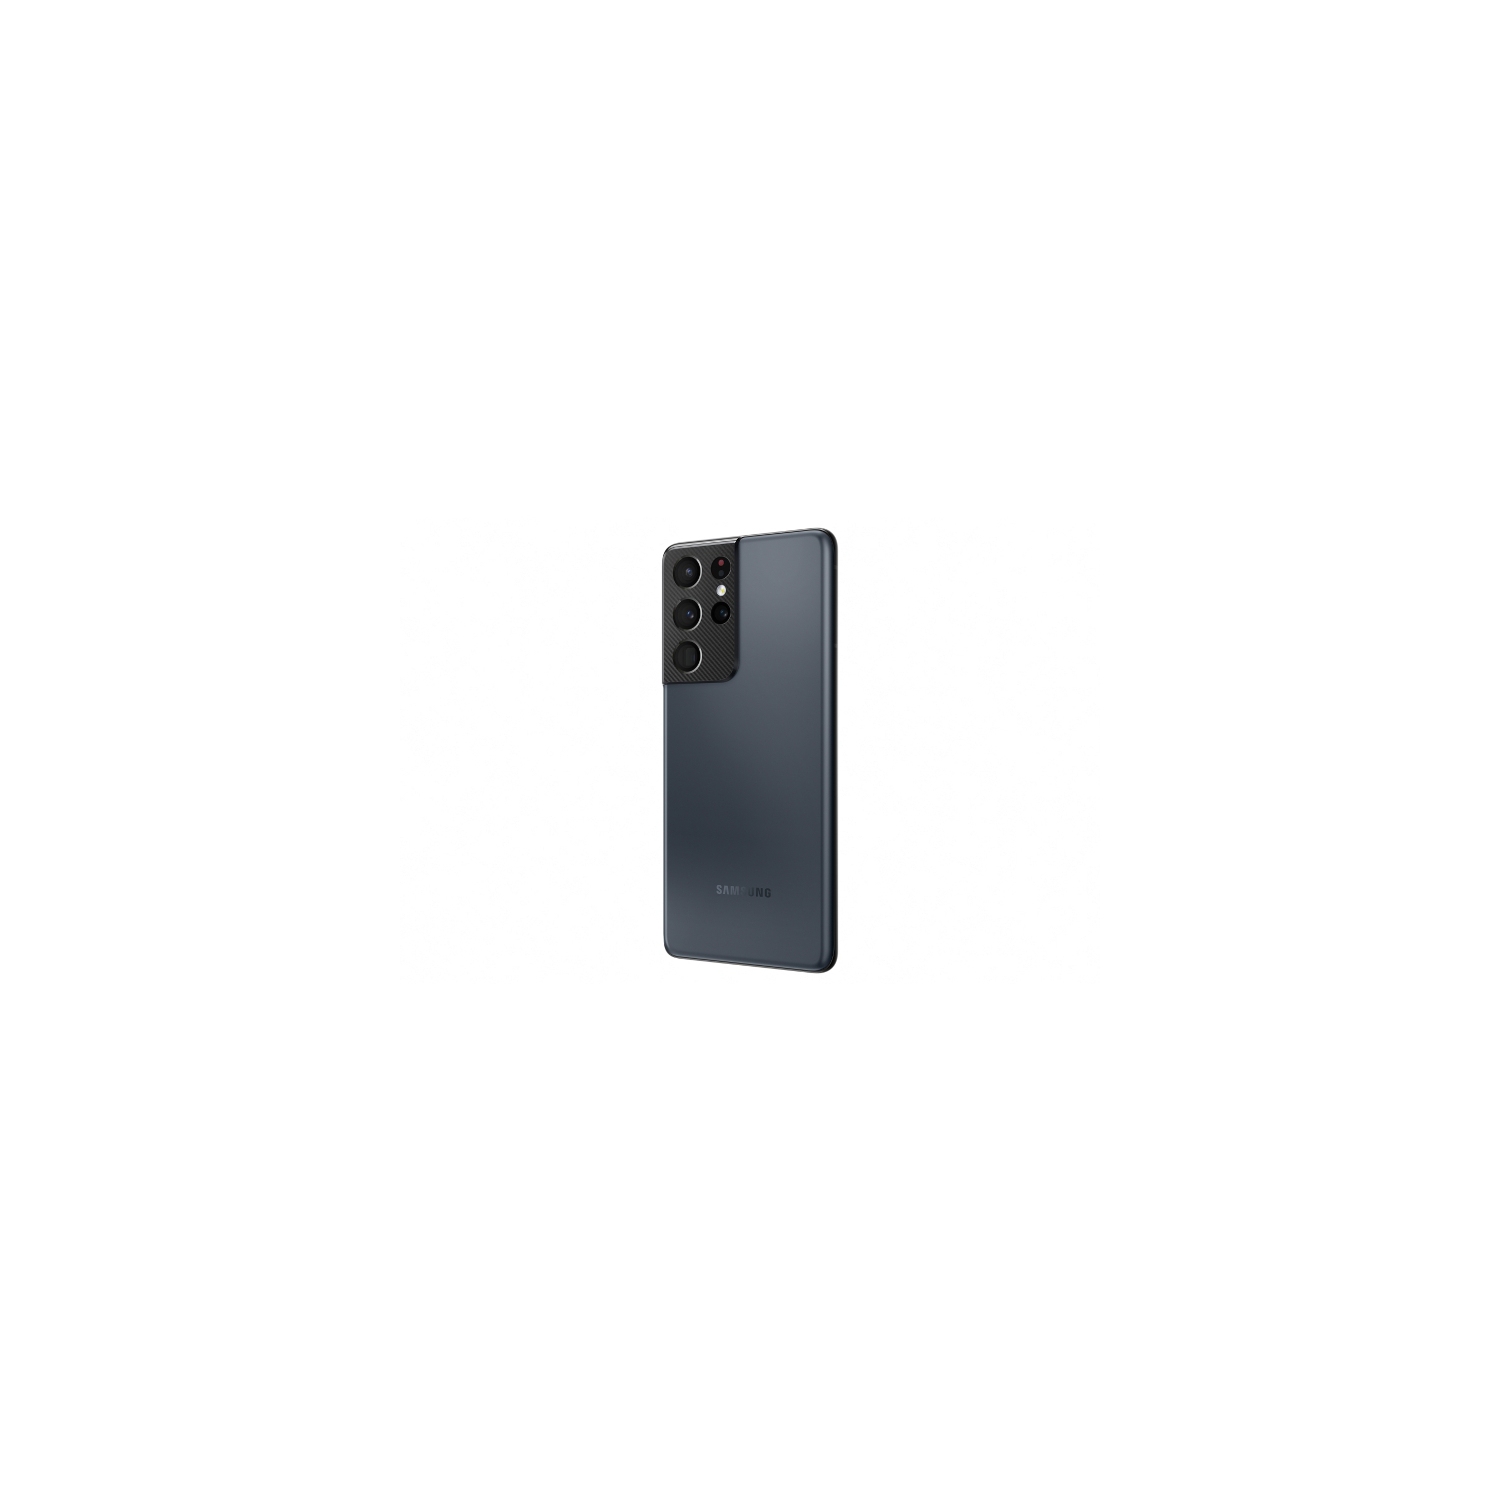 Refurbished (Good) - Samsung Galaxy S21 Ultra 5G 128GB Smartphone - Phantom Navy - Unlocked